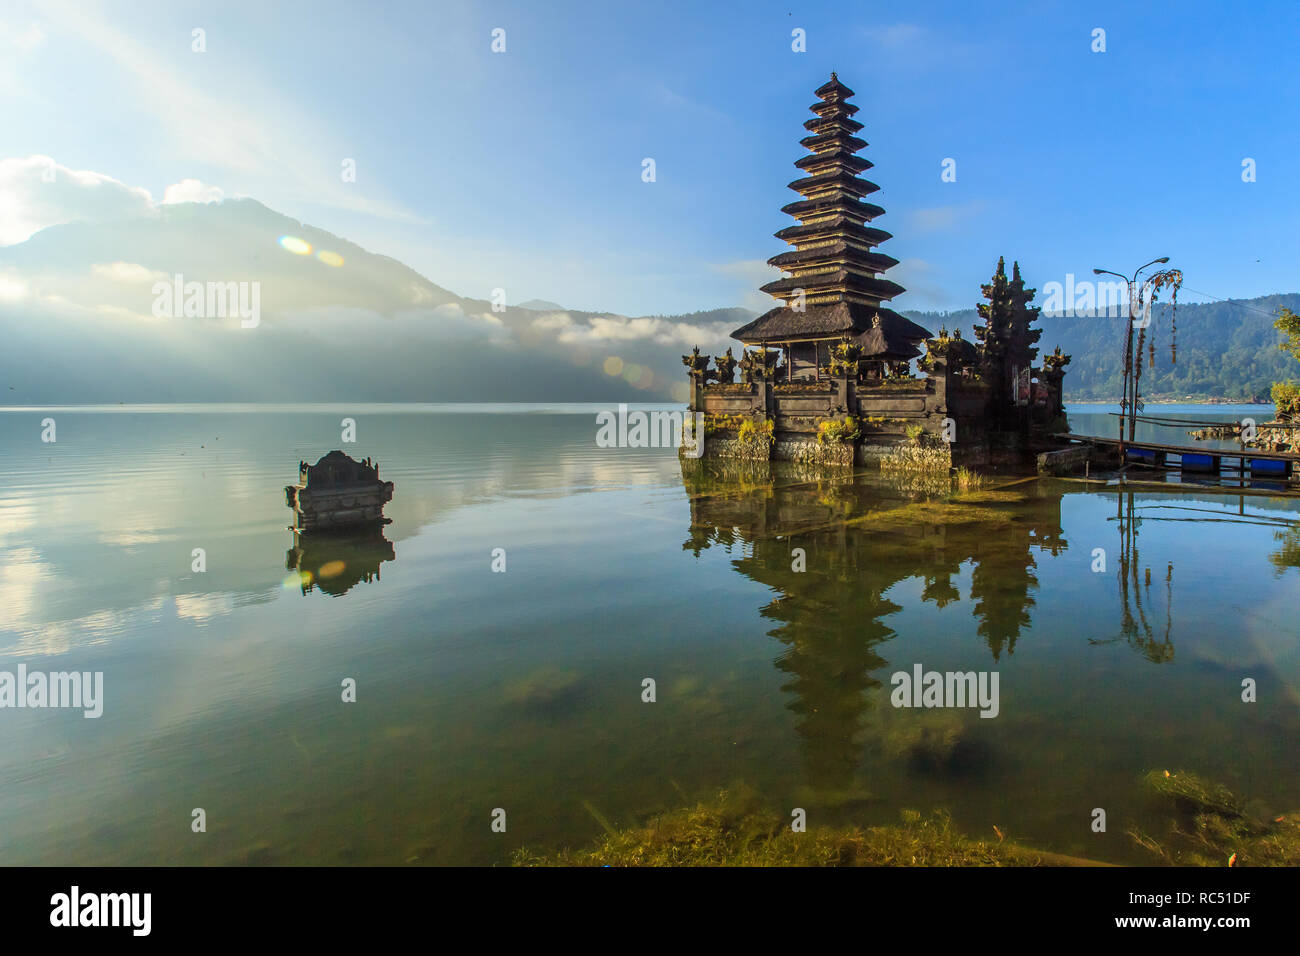 Morning scene at Batur lake, Bali Indonesia. Stock Photo